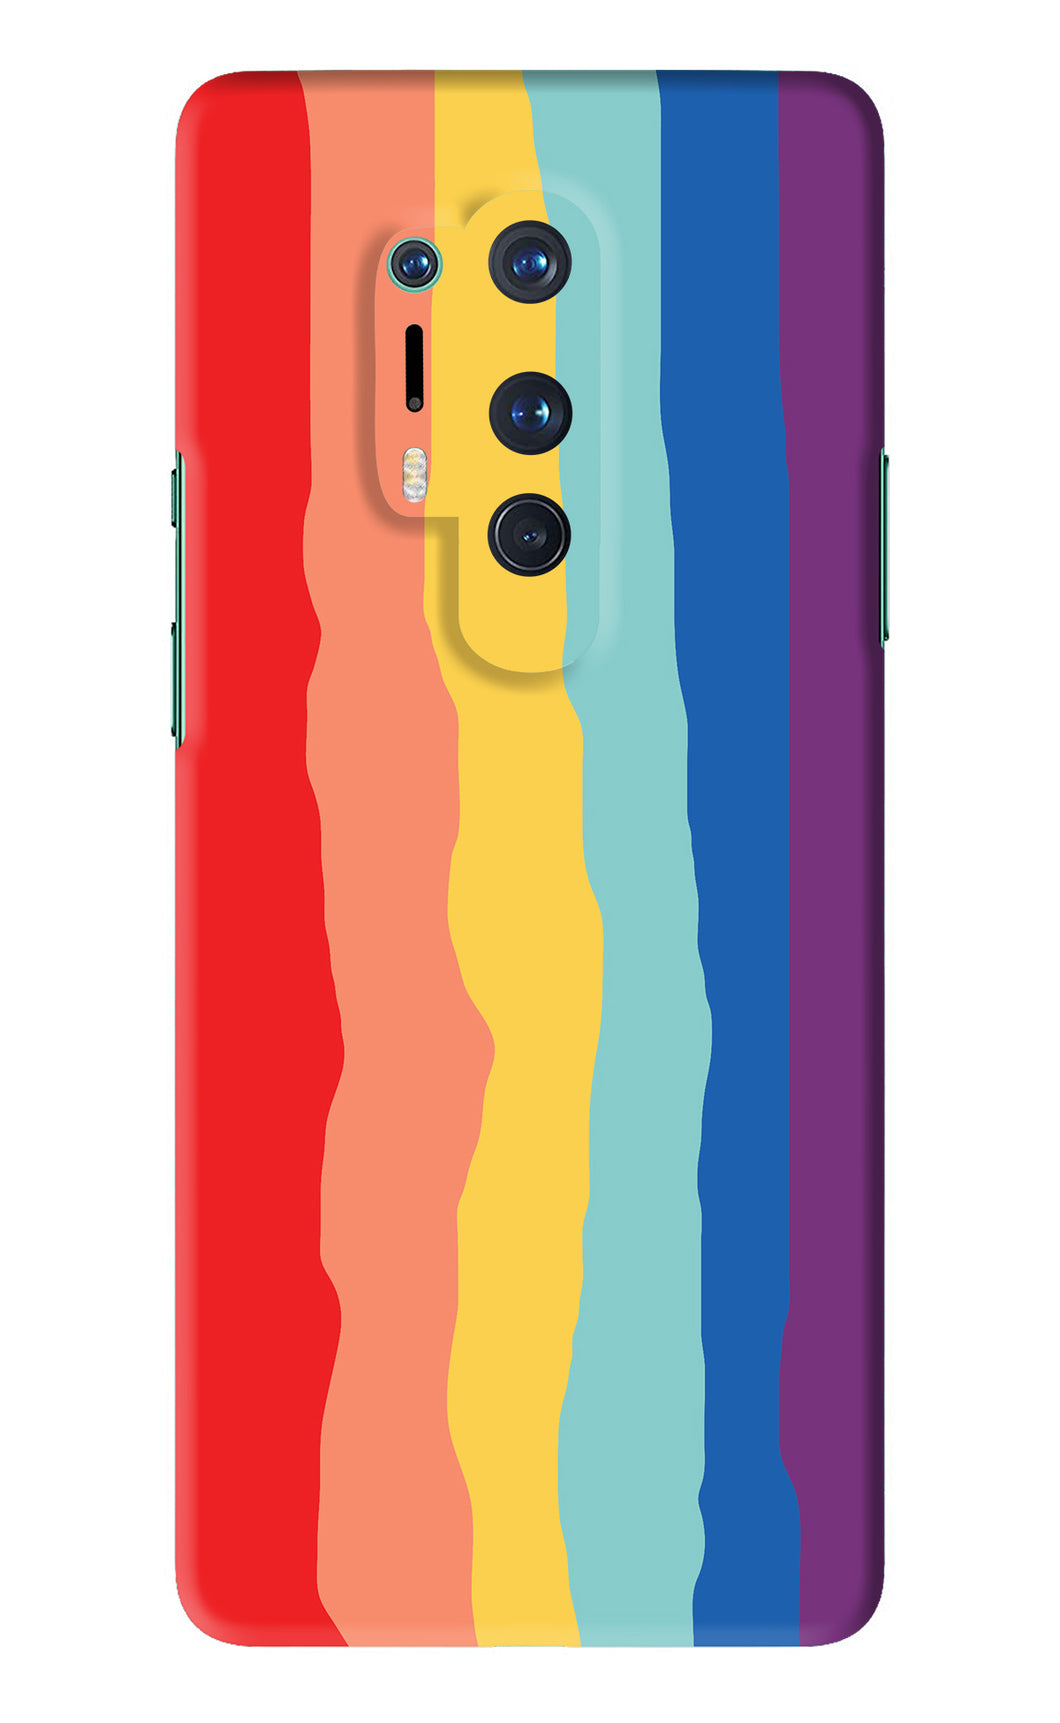 Rainbow OnePlus 8 Pro Back Skin Wrap